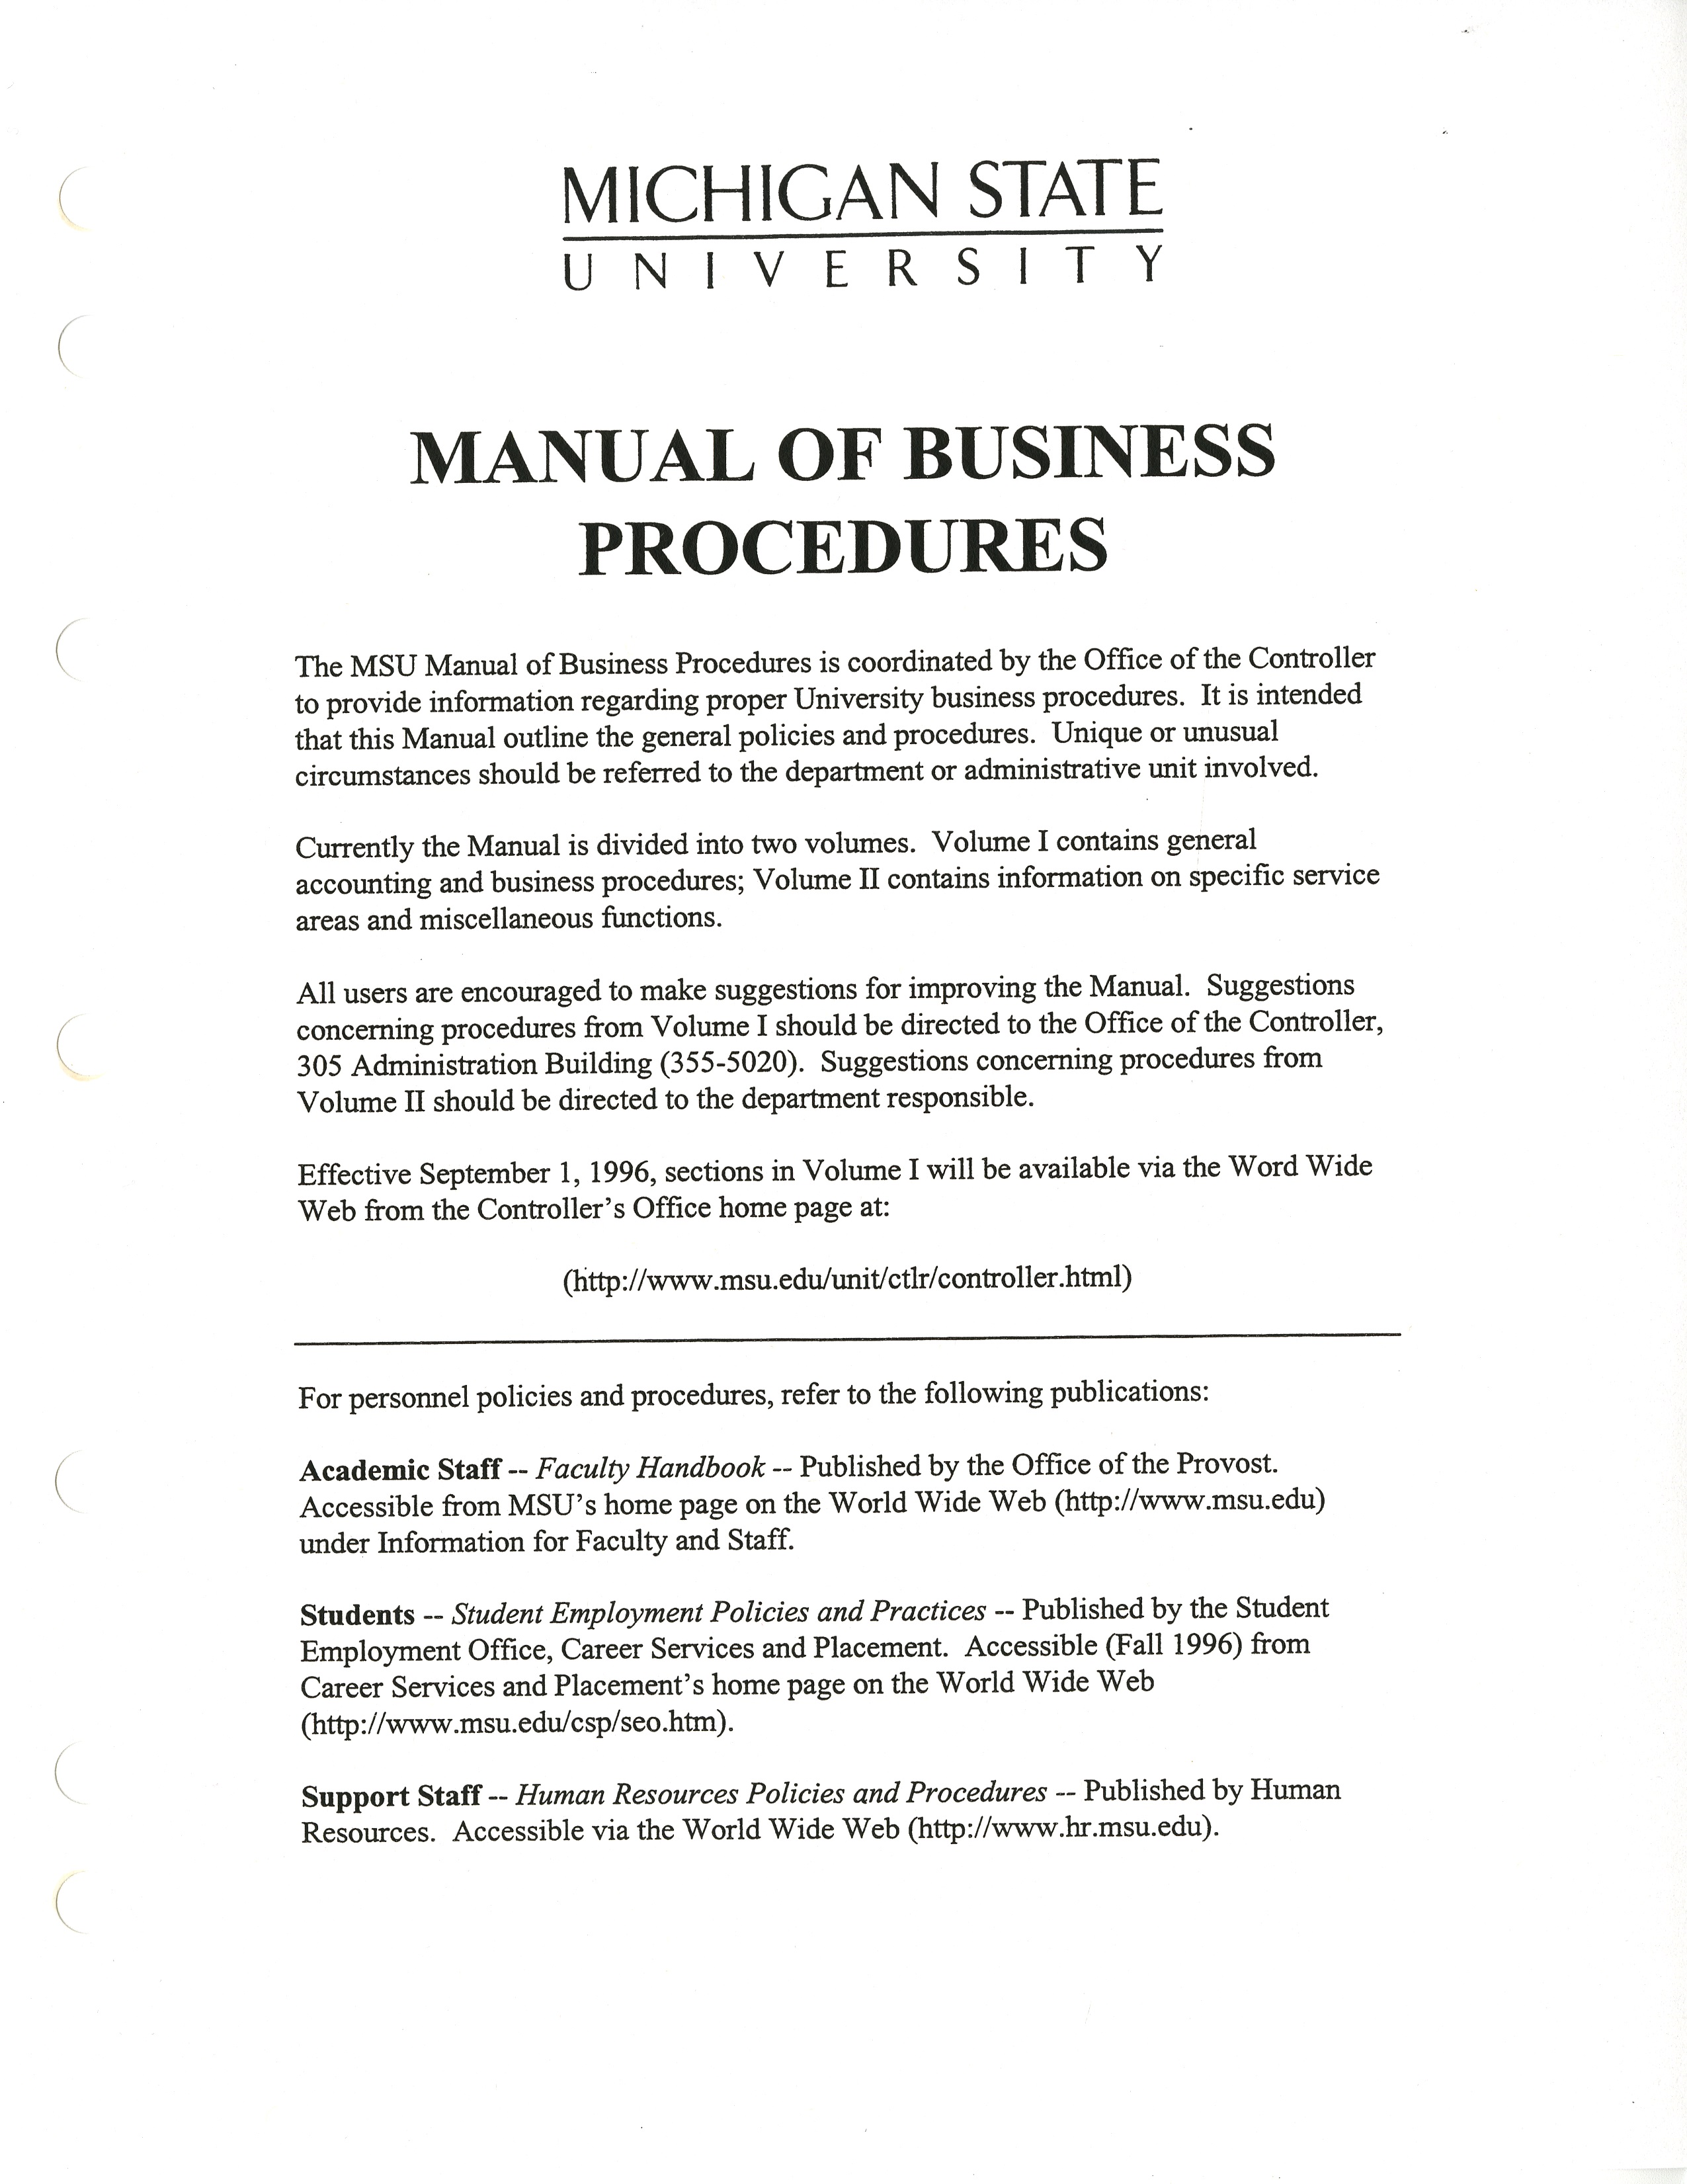 MSU Manual of Business Procedures, 1996